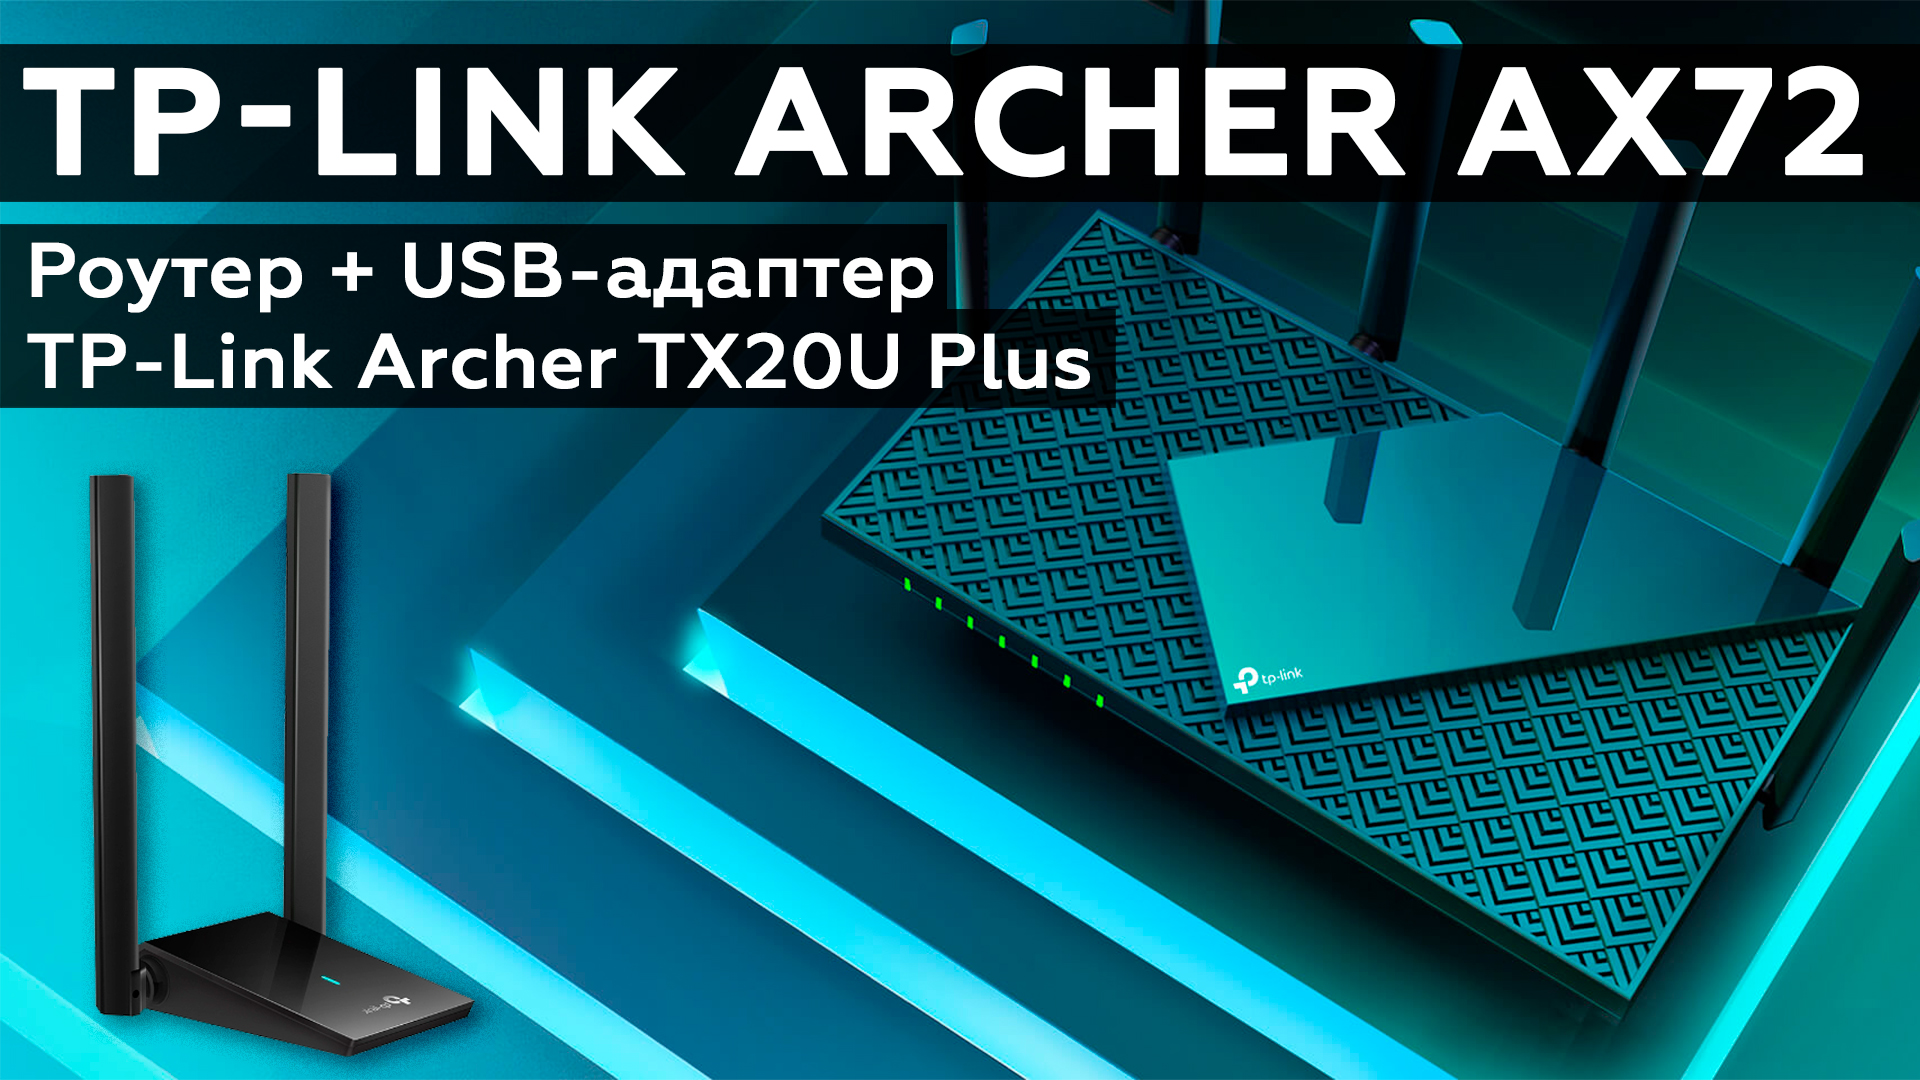 Двухдиапазонный роутер TP-Link Archer AX72 и USB-адаптер TP-Link Archer TX20U Plus